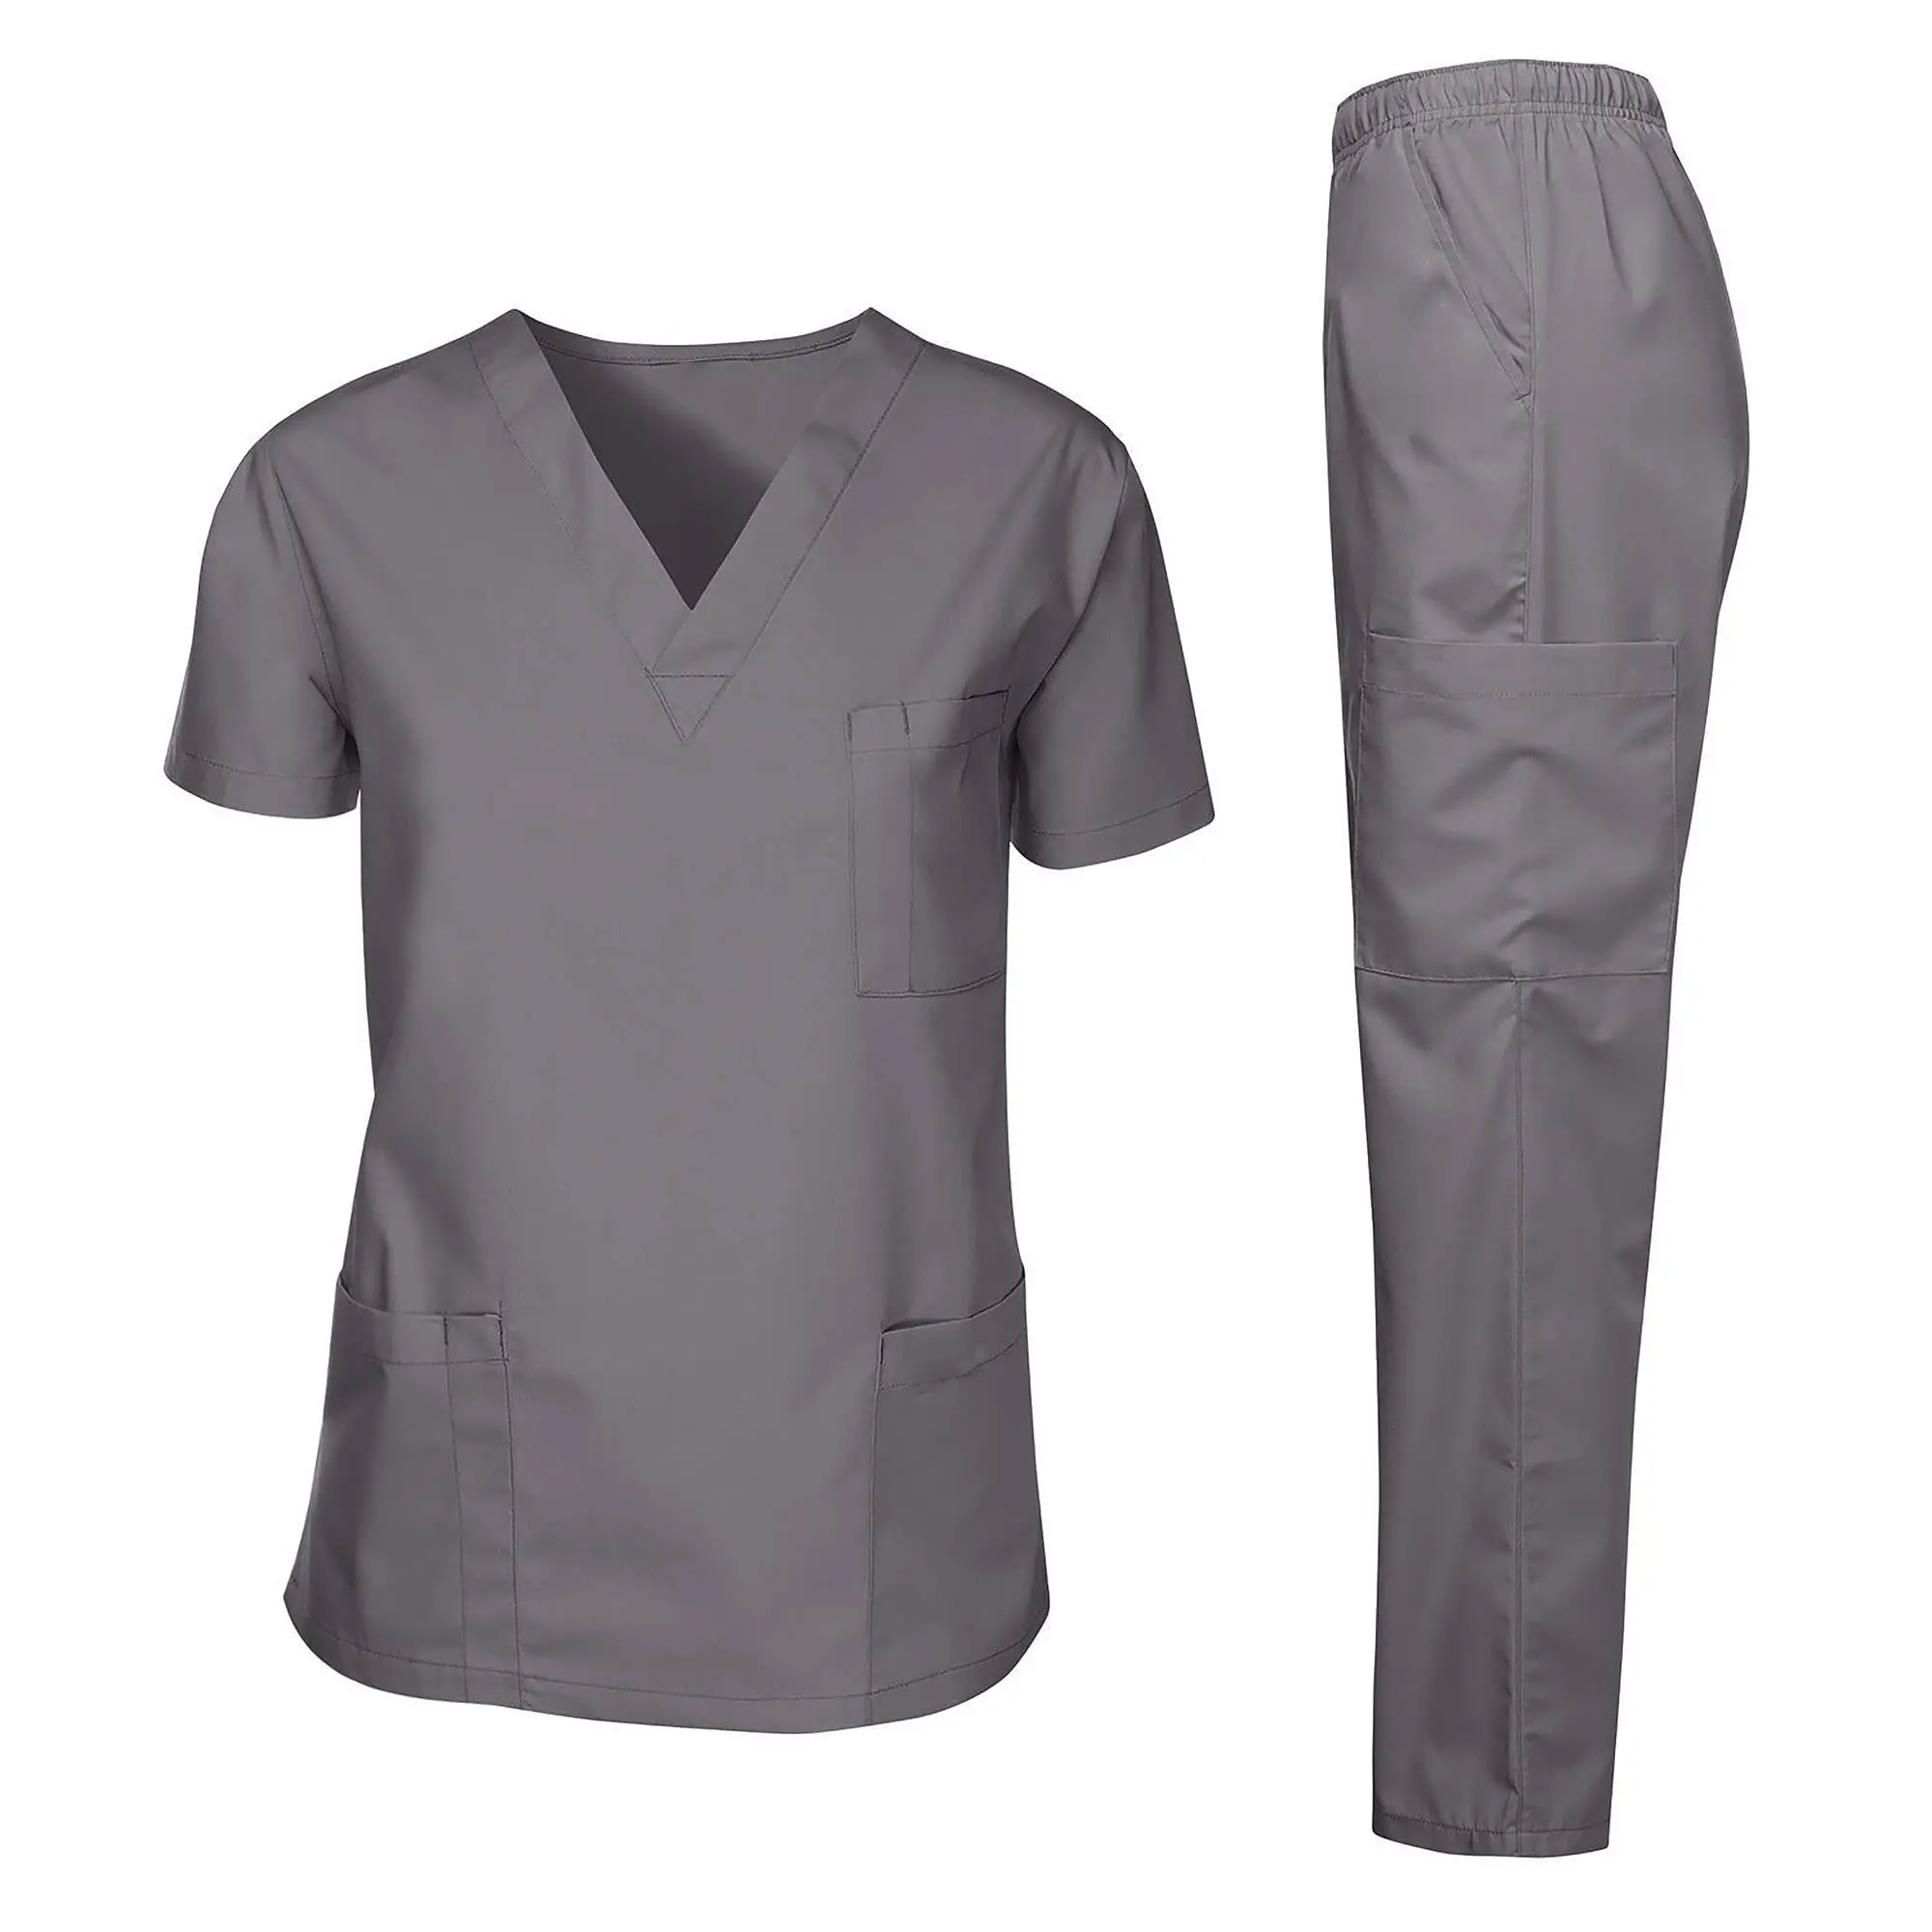 Scrubs Medical Uniform Women and Man Scrubs Set Medical Uniforms Top and Pants Unisex scrub set Nursing uniform with custom logo